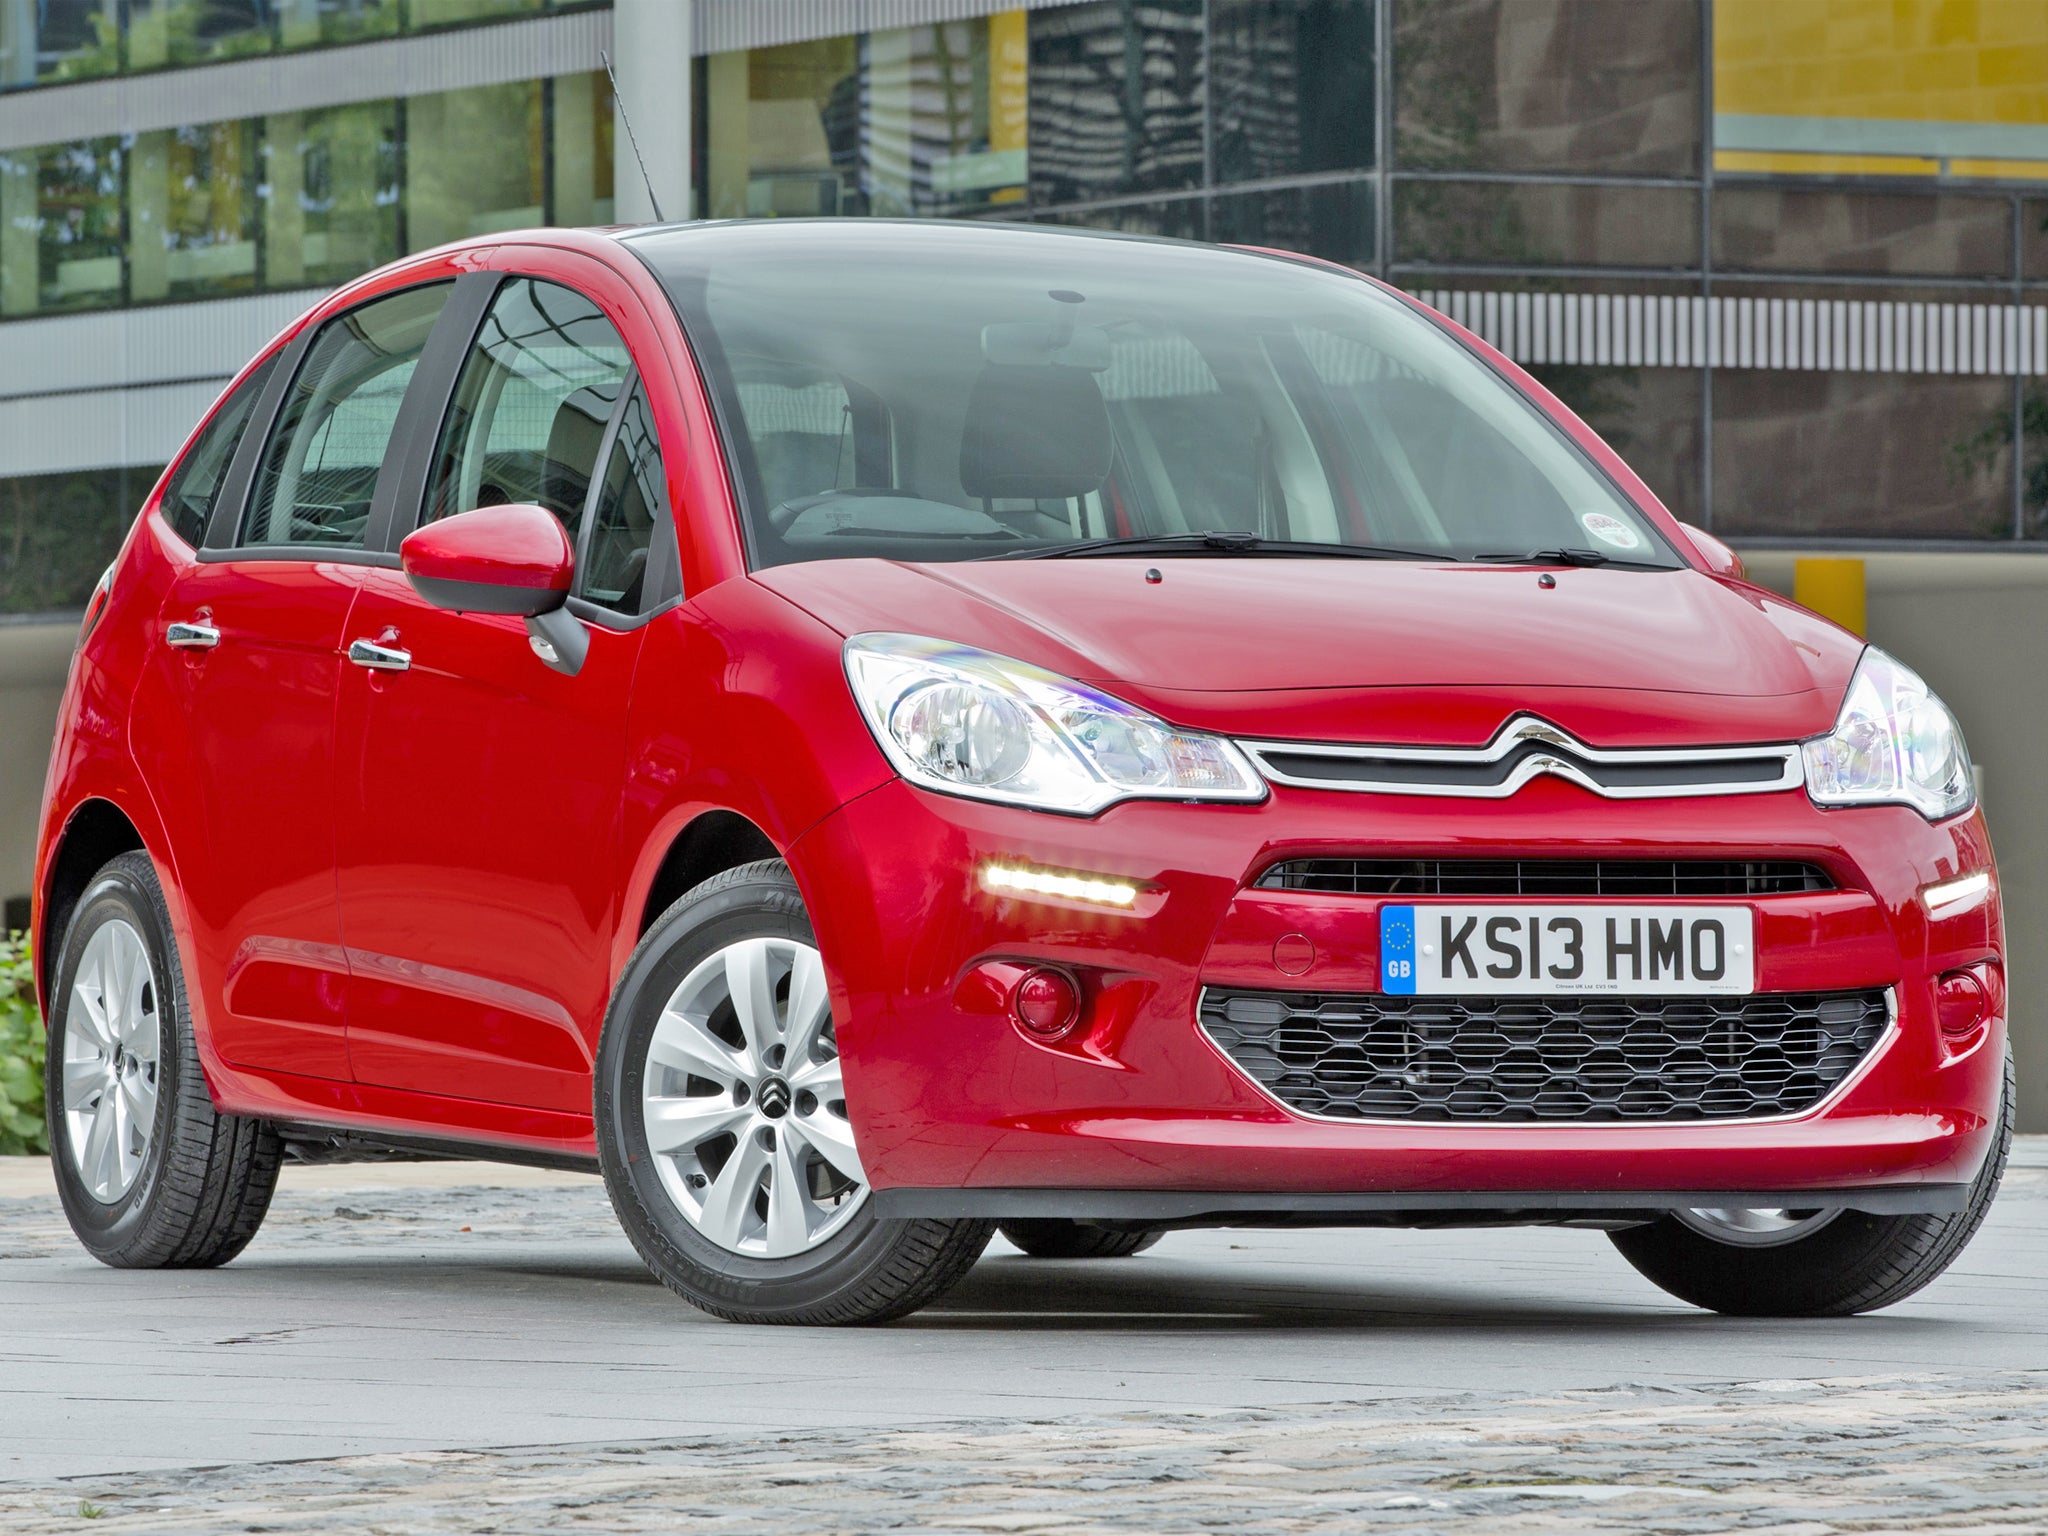 Vague steering: the new Citroën C3